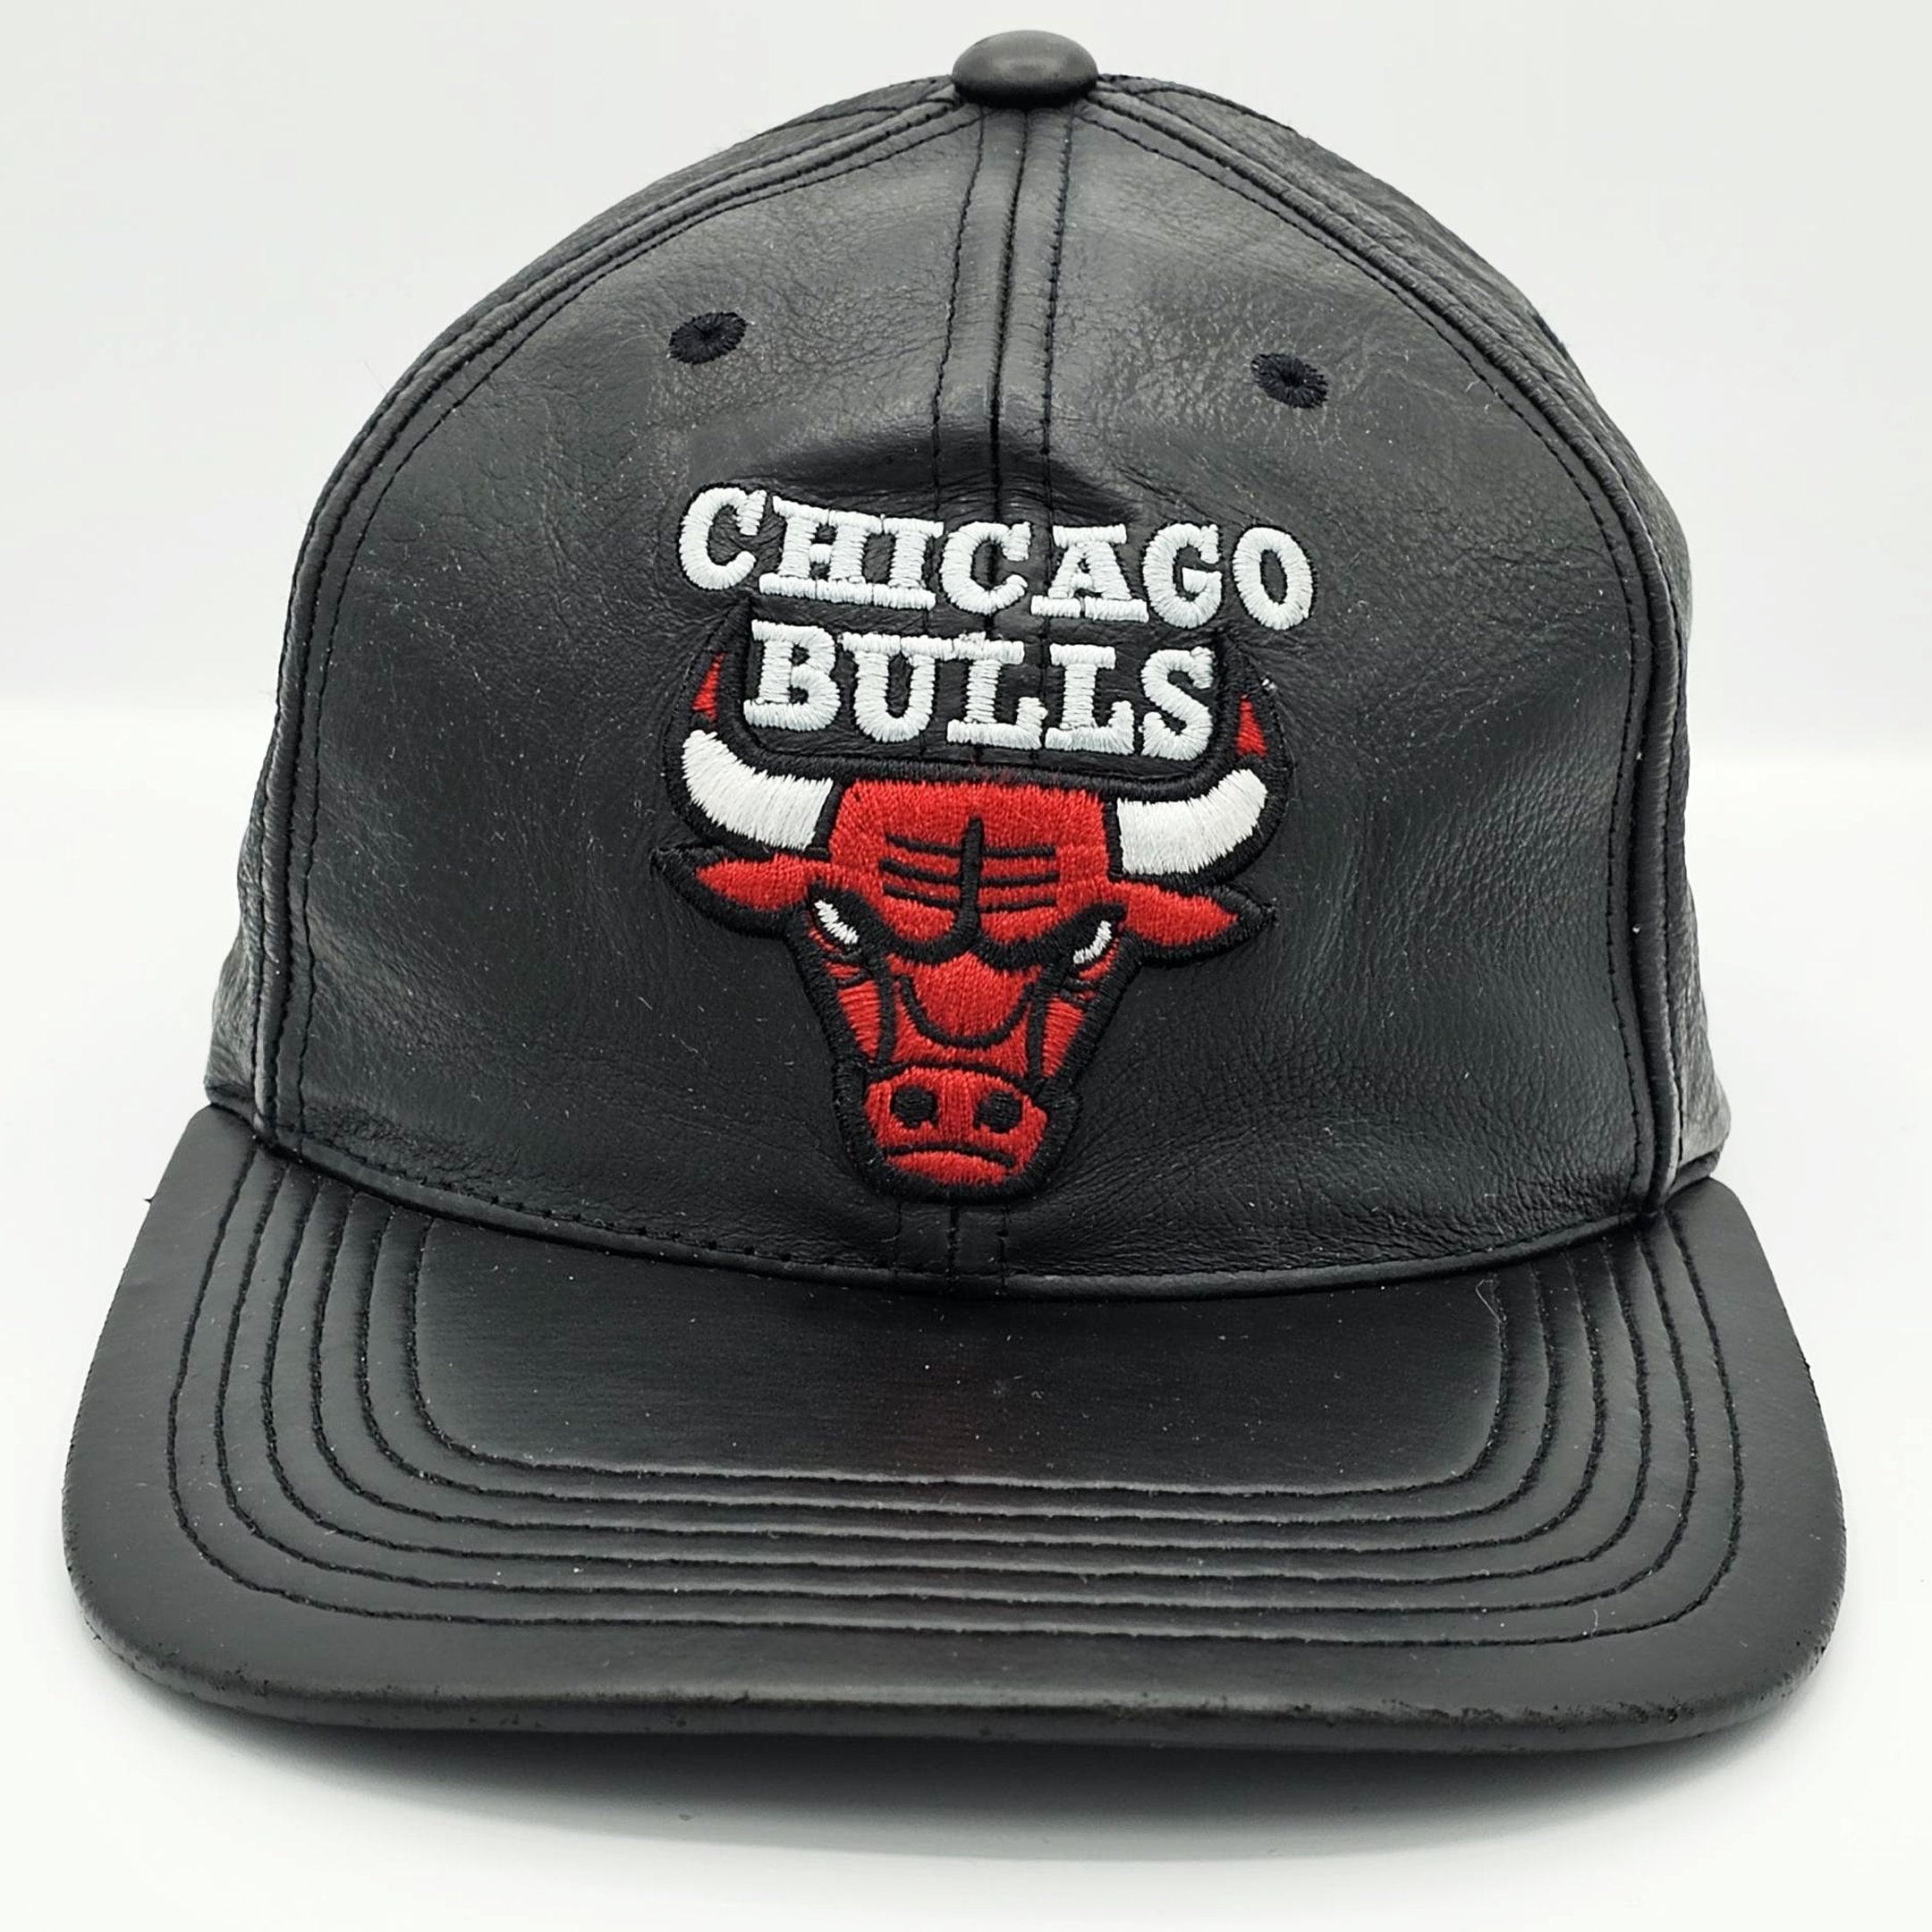 Chicago bulls nba snapback - Gem